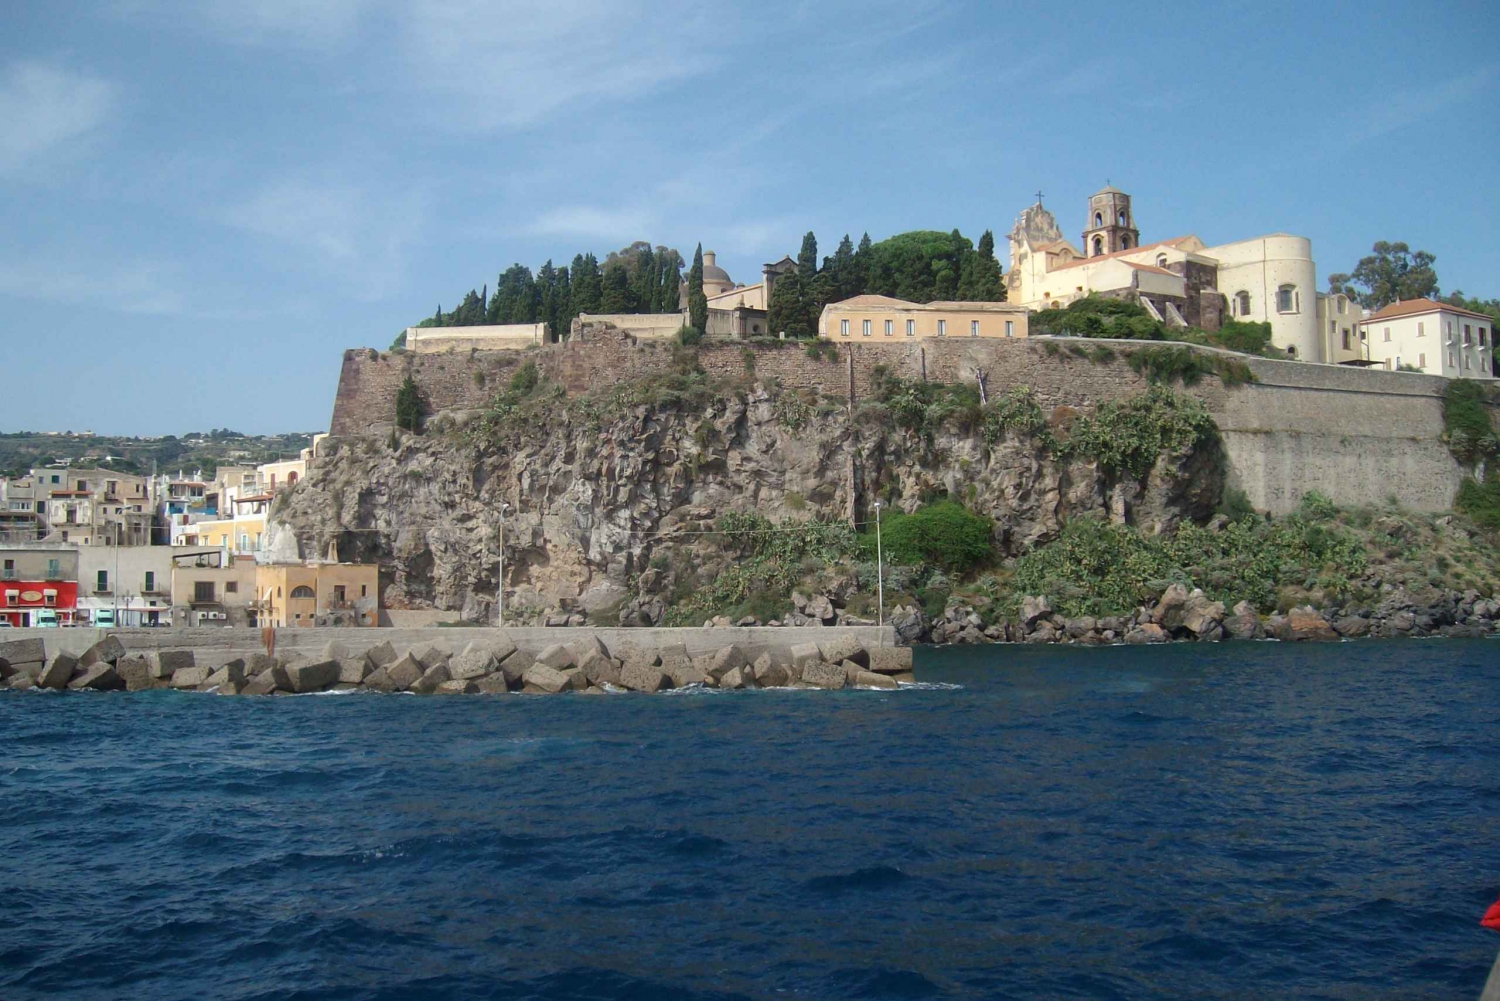 Milazzo: Lipari, Panarea, and Stromboli Islands Day Tour